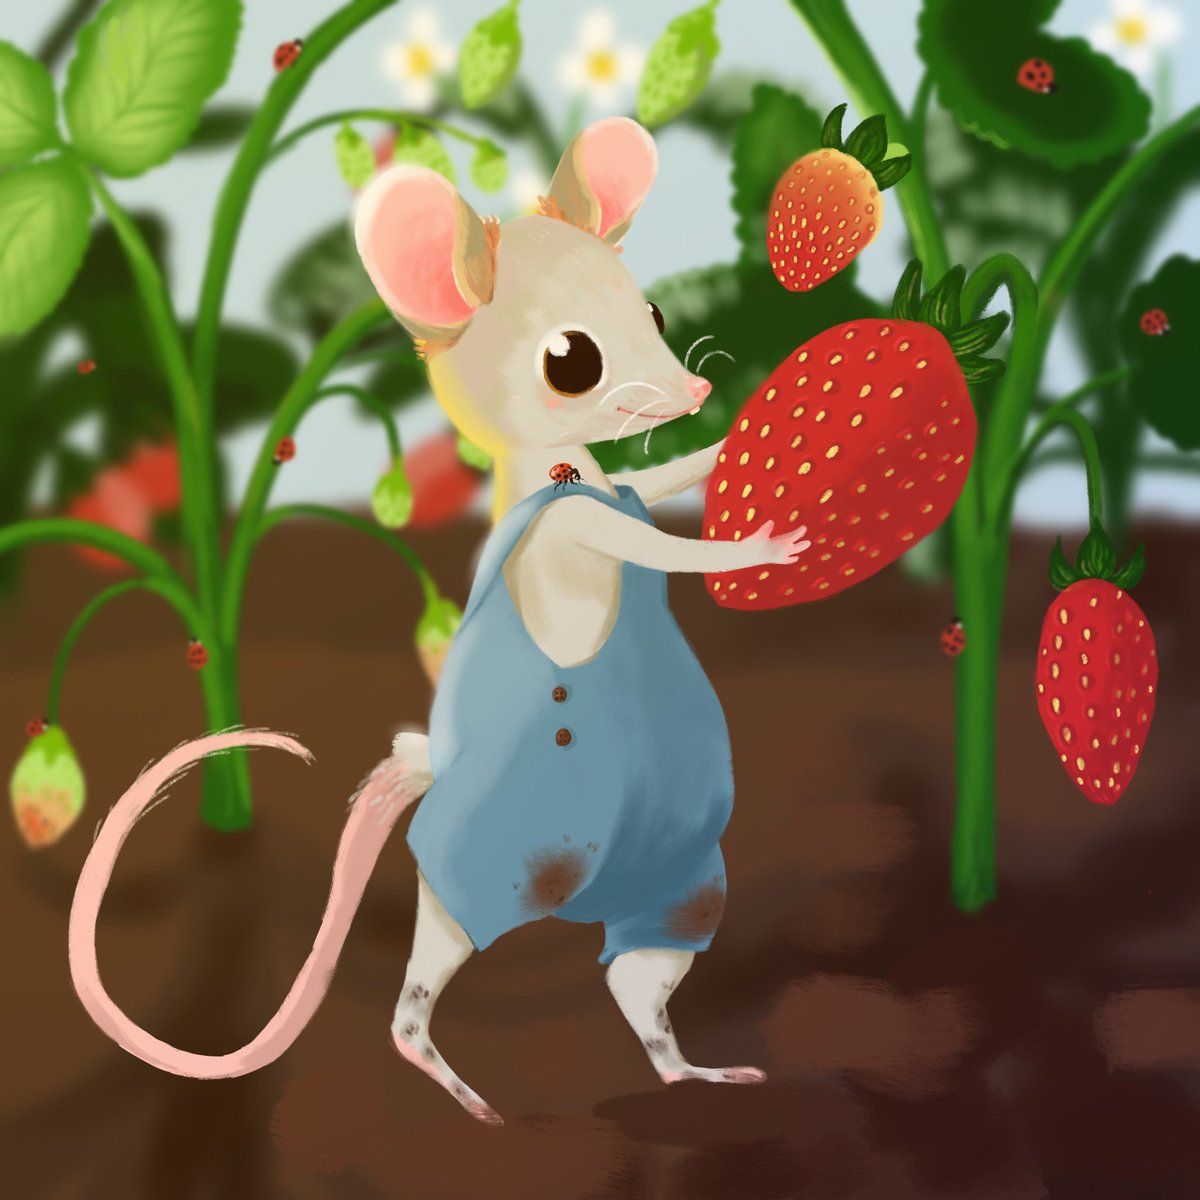 New Mousey Illustration #mouse #art #digitalpainting #illustration #childrensbook #storybook #cartoon #animalcharacter #farming #childrenspublisher #cute